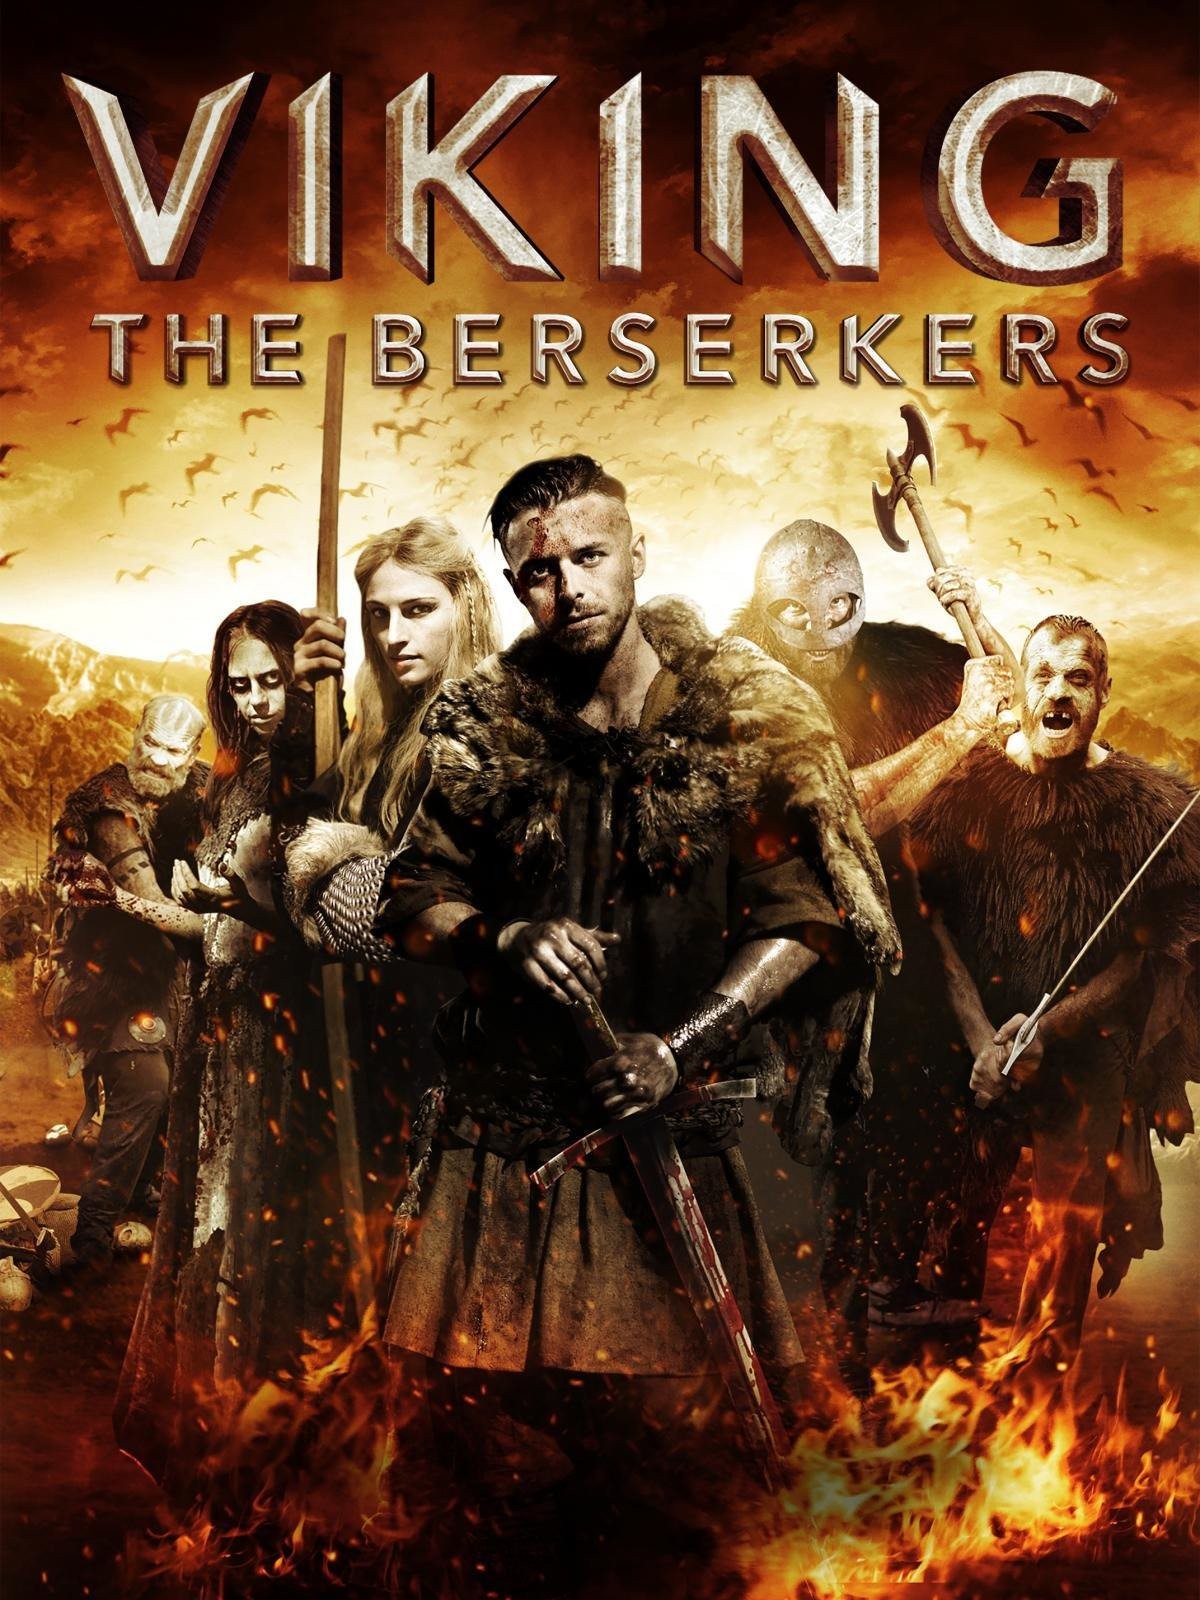 Viking- The Berserkers - Full Action Adventure Movie